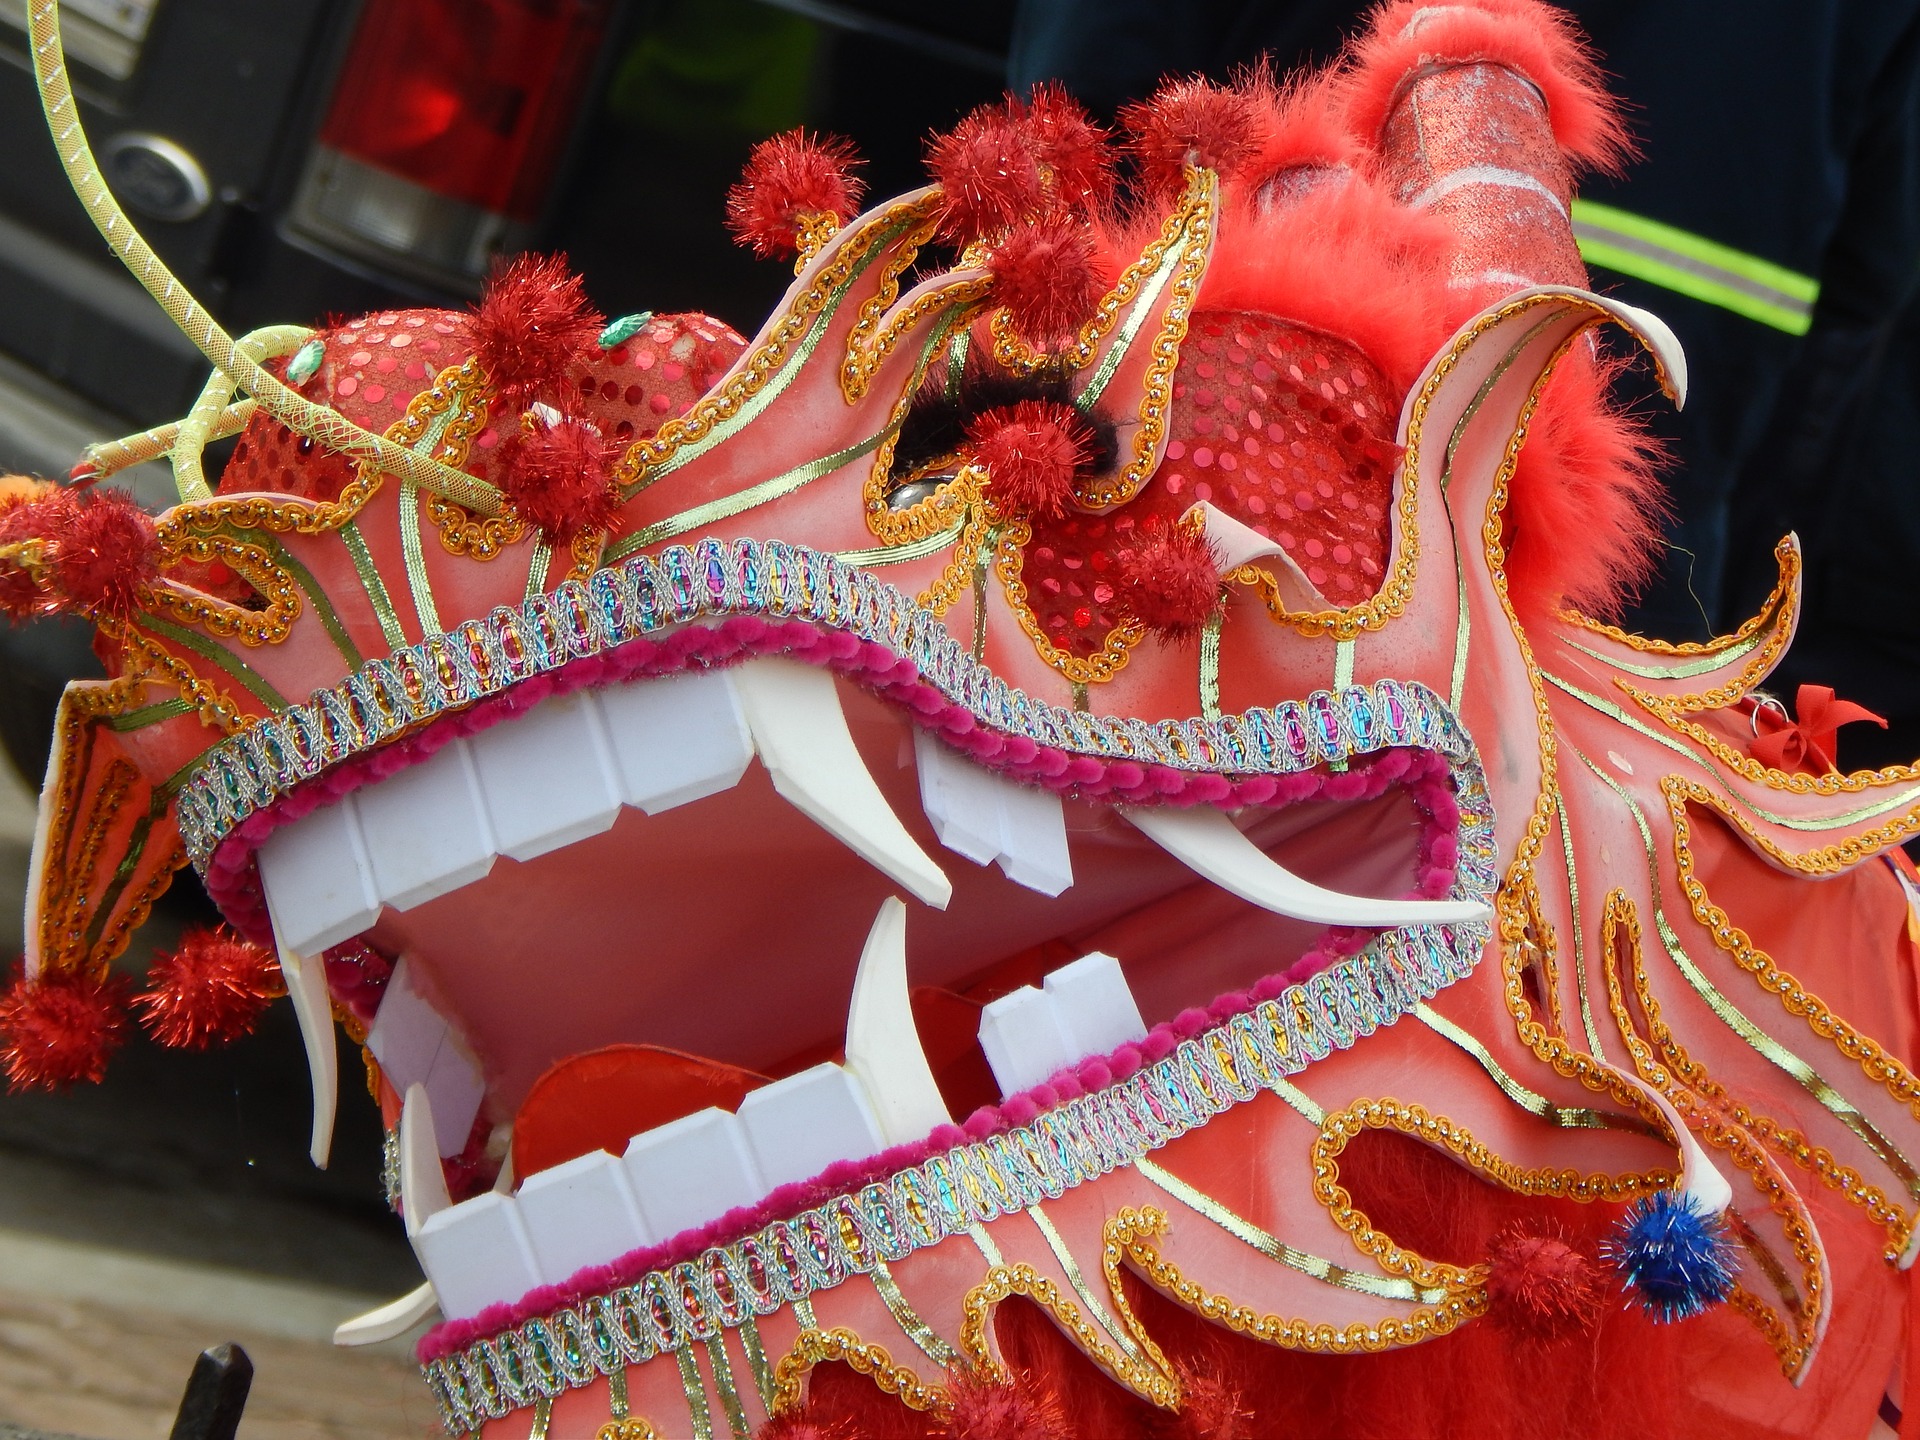 Chinese New Year in Cambodia